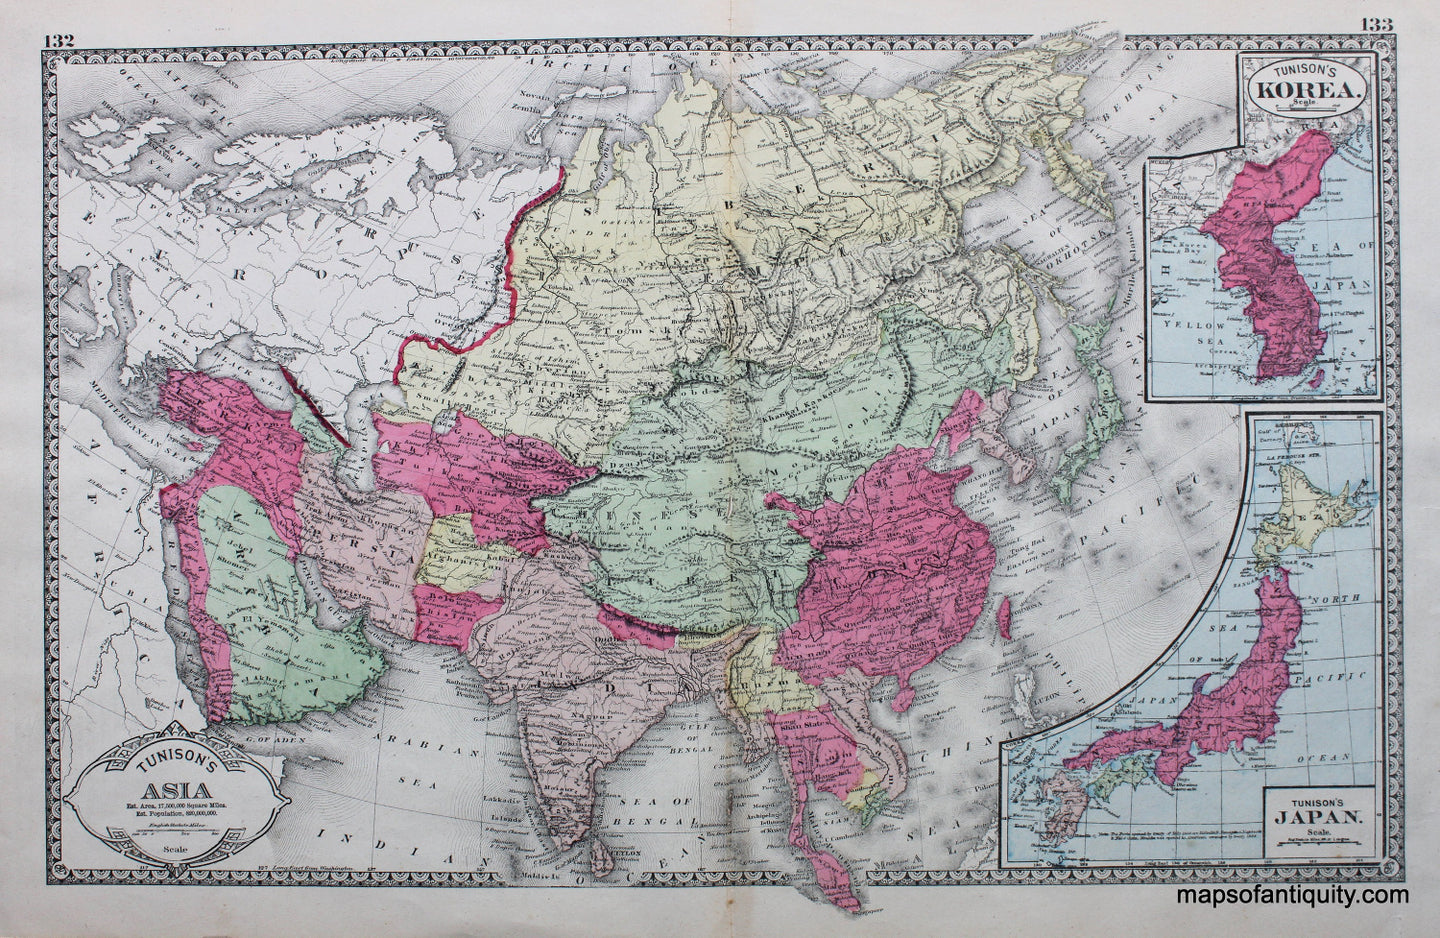 Antique-Hand-Colored-Map-Tunison's-Asia-Japan-Korea-******-Asia--1885-Tunison-Maps-Of-Antiquity